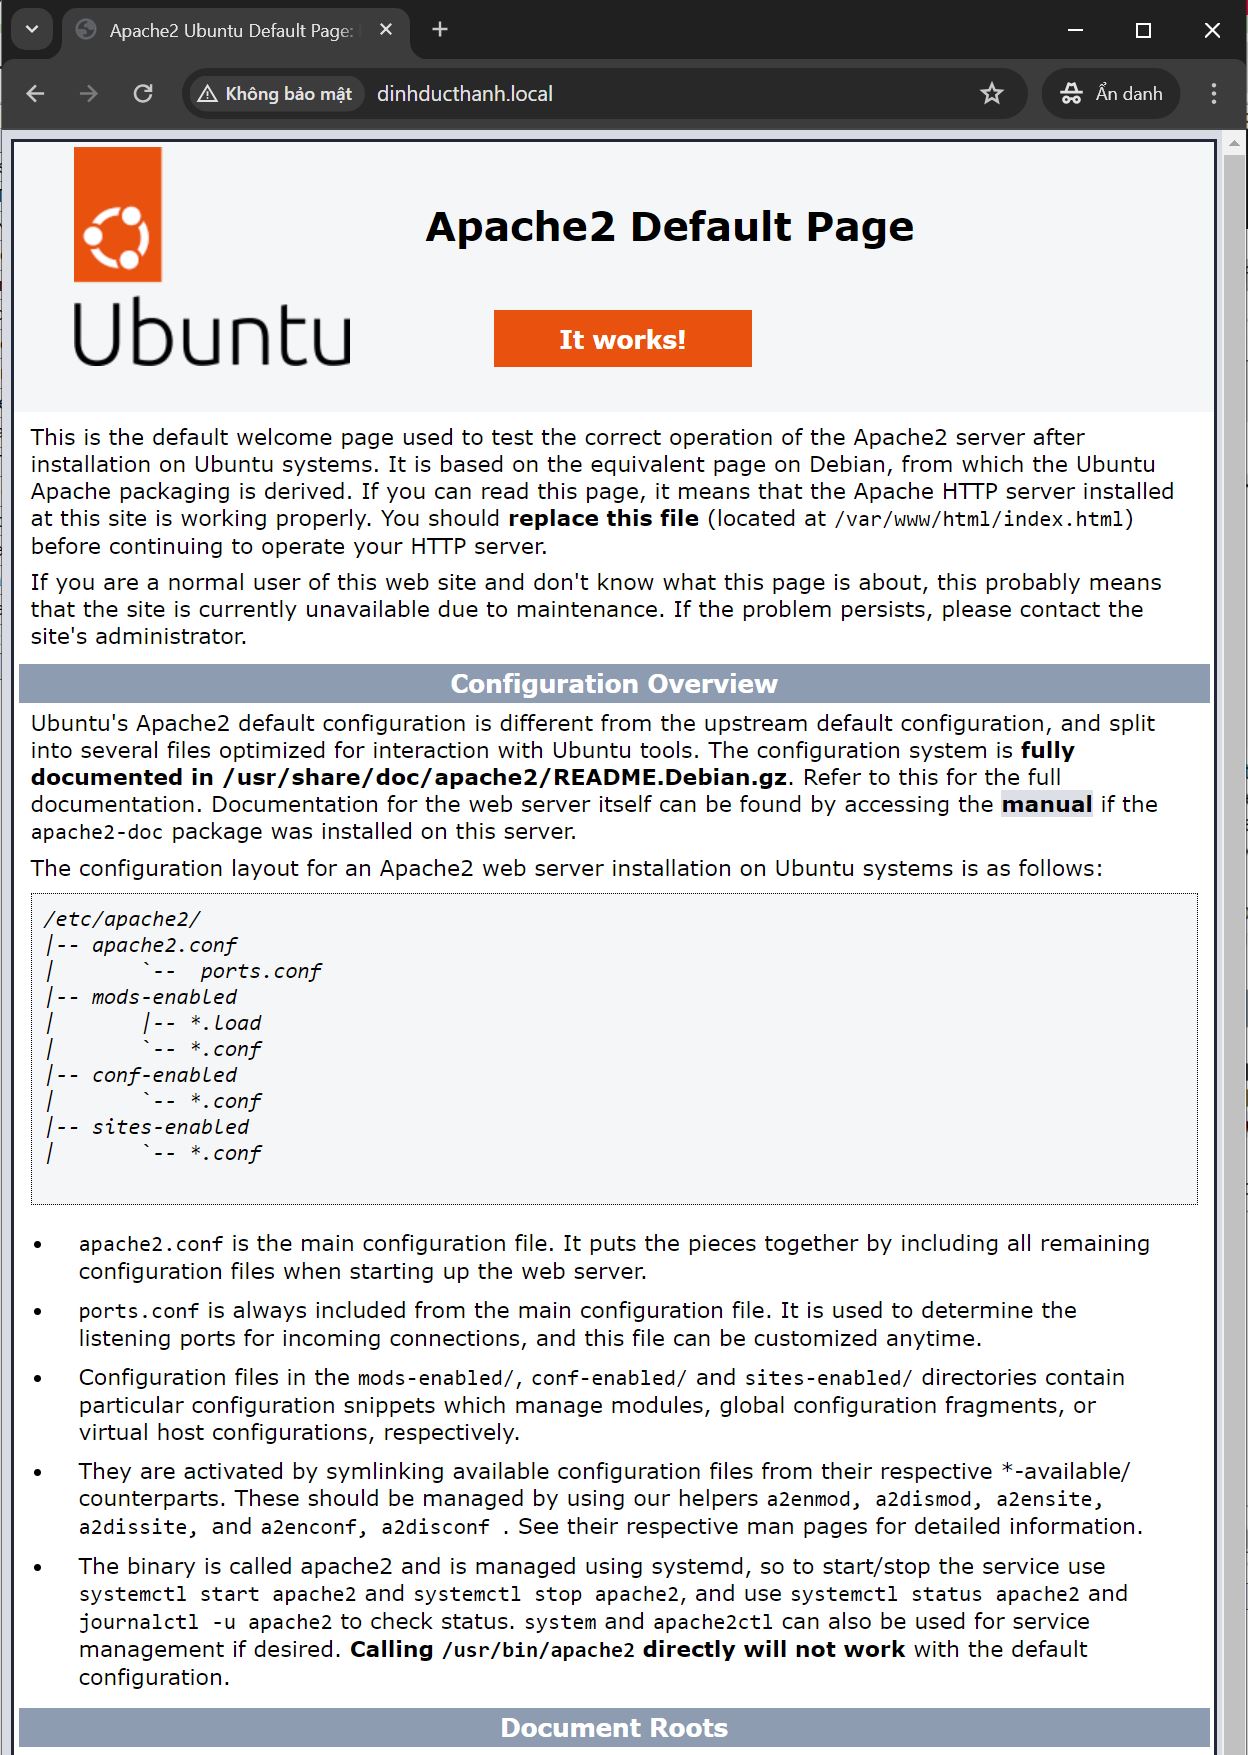 Cài đặt Apache2 trên Ubunut 22.04